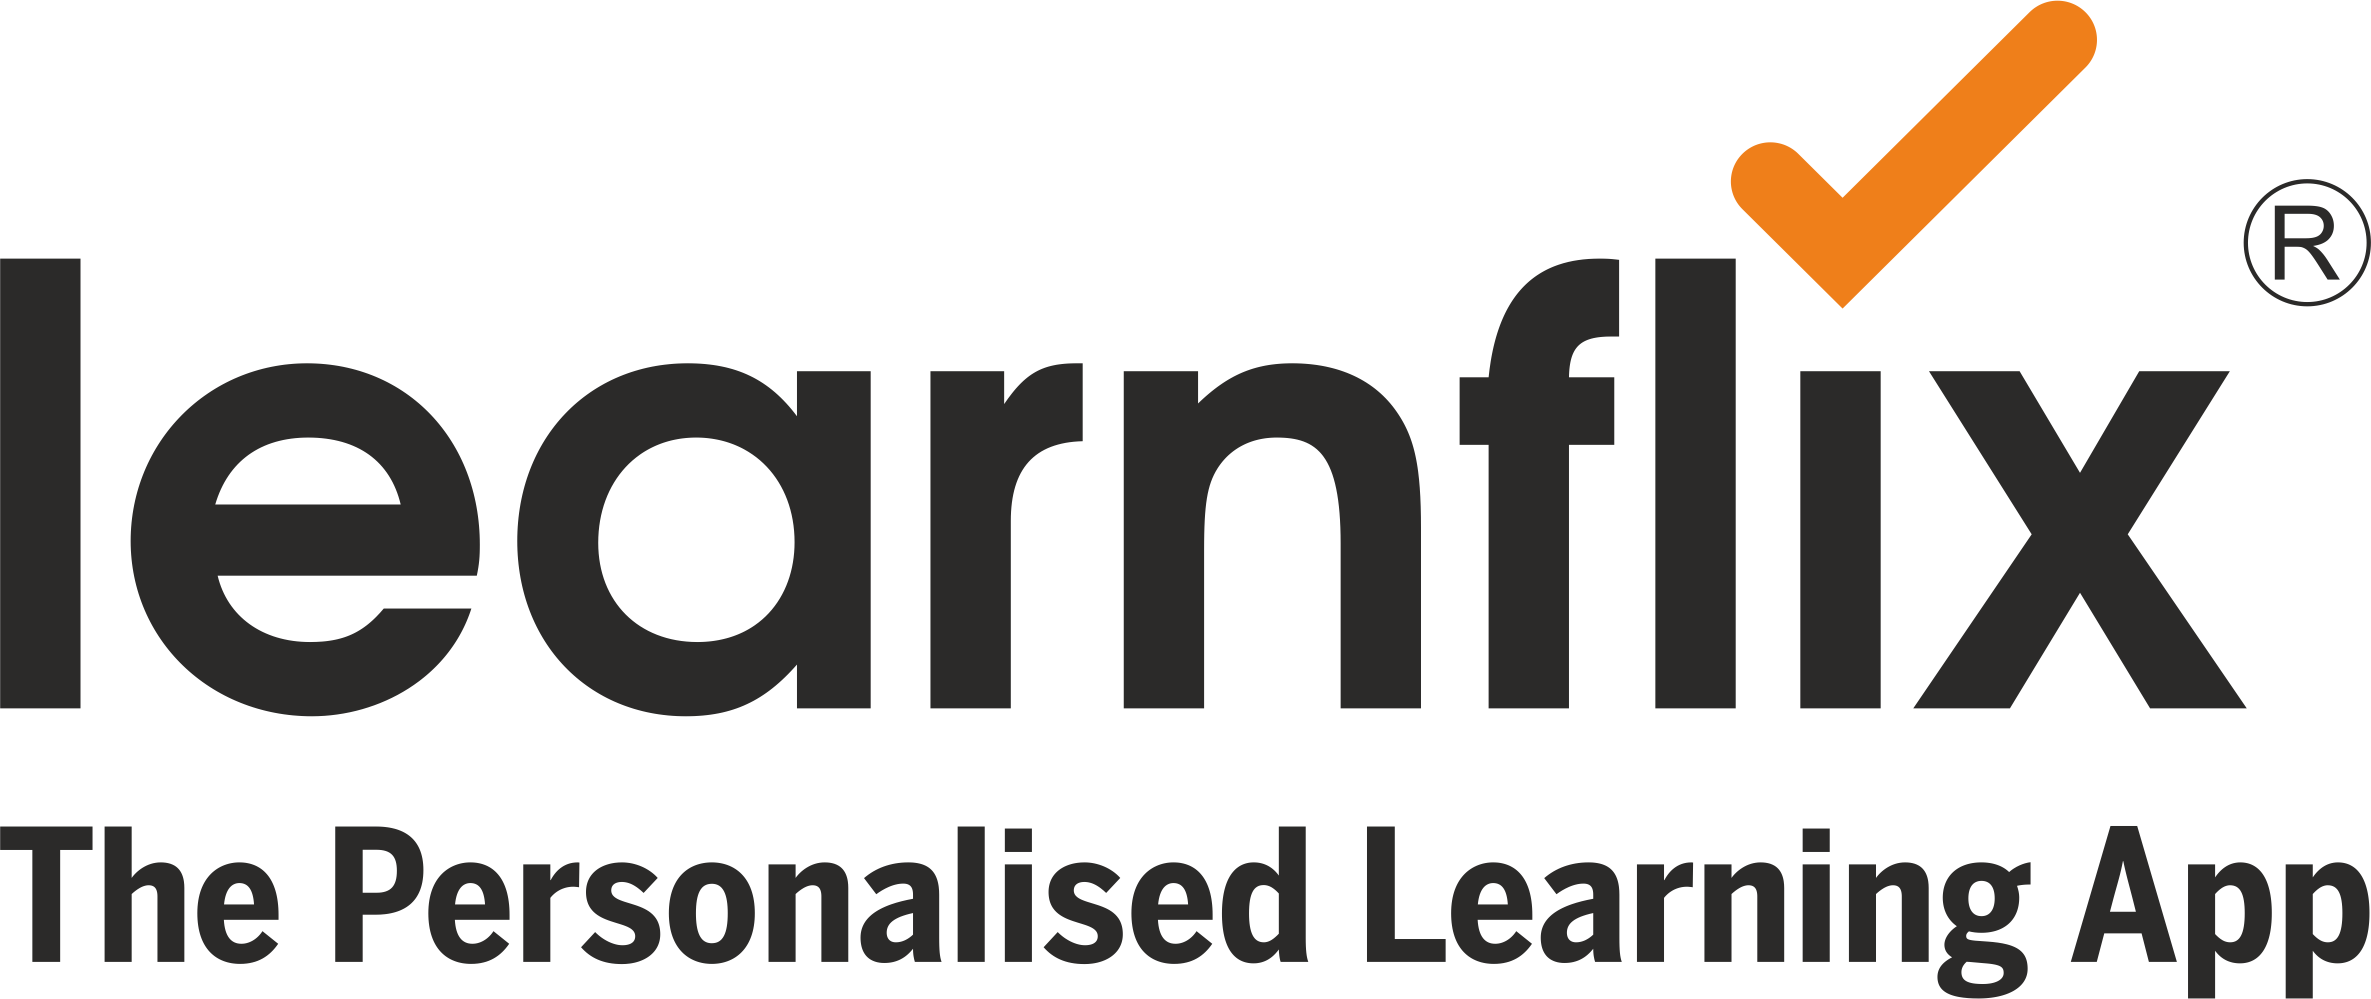 LEARNFLIX logo